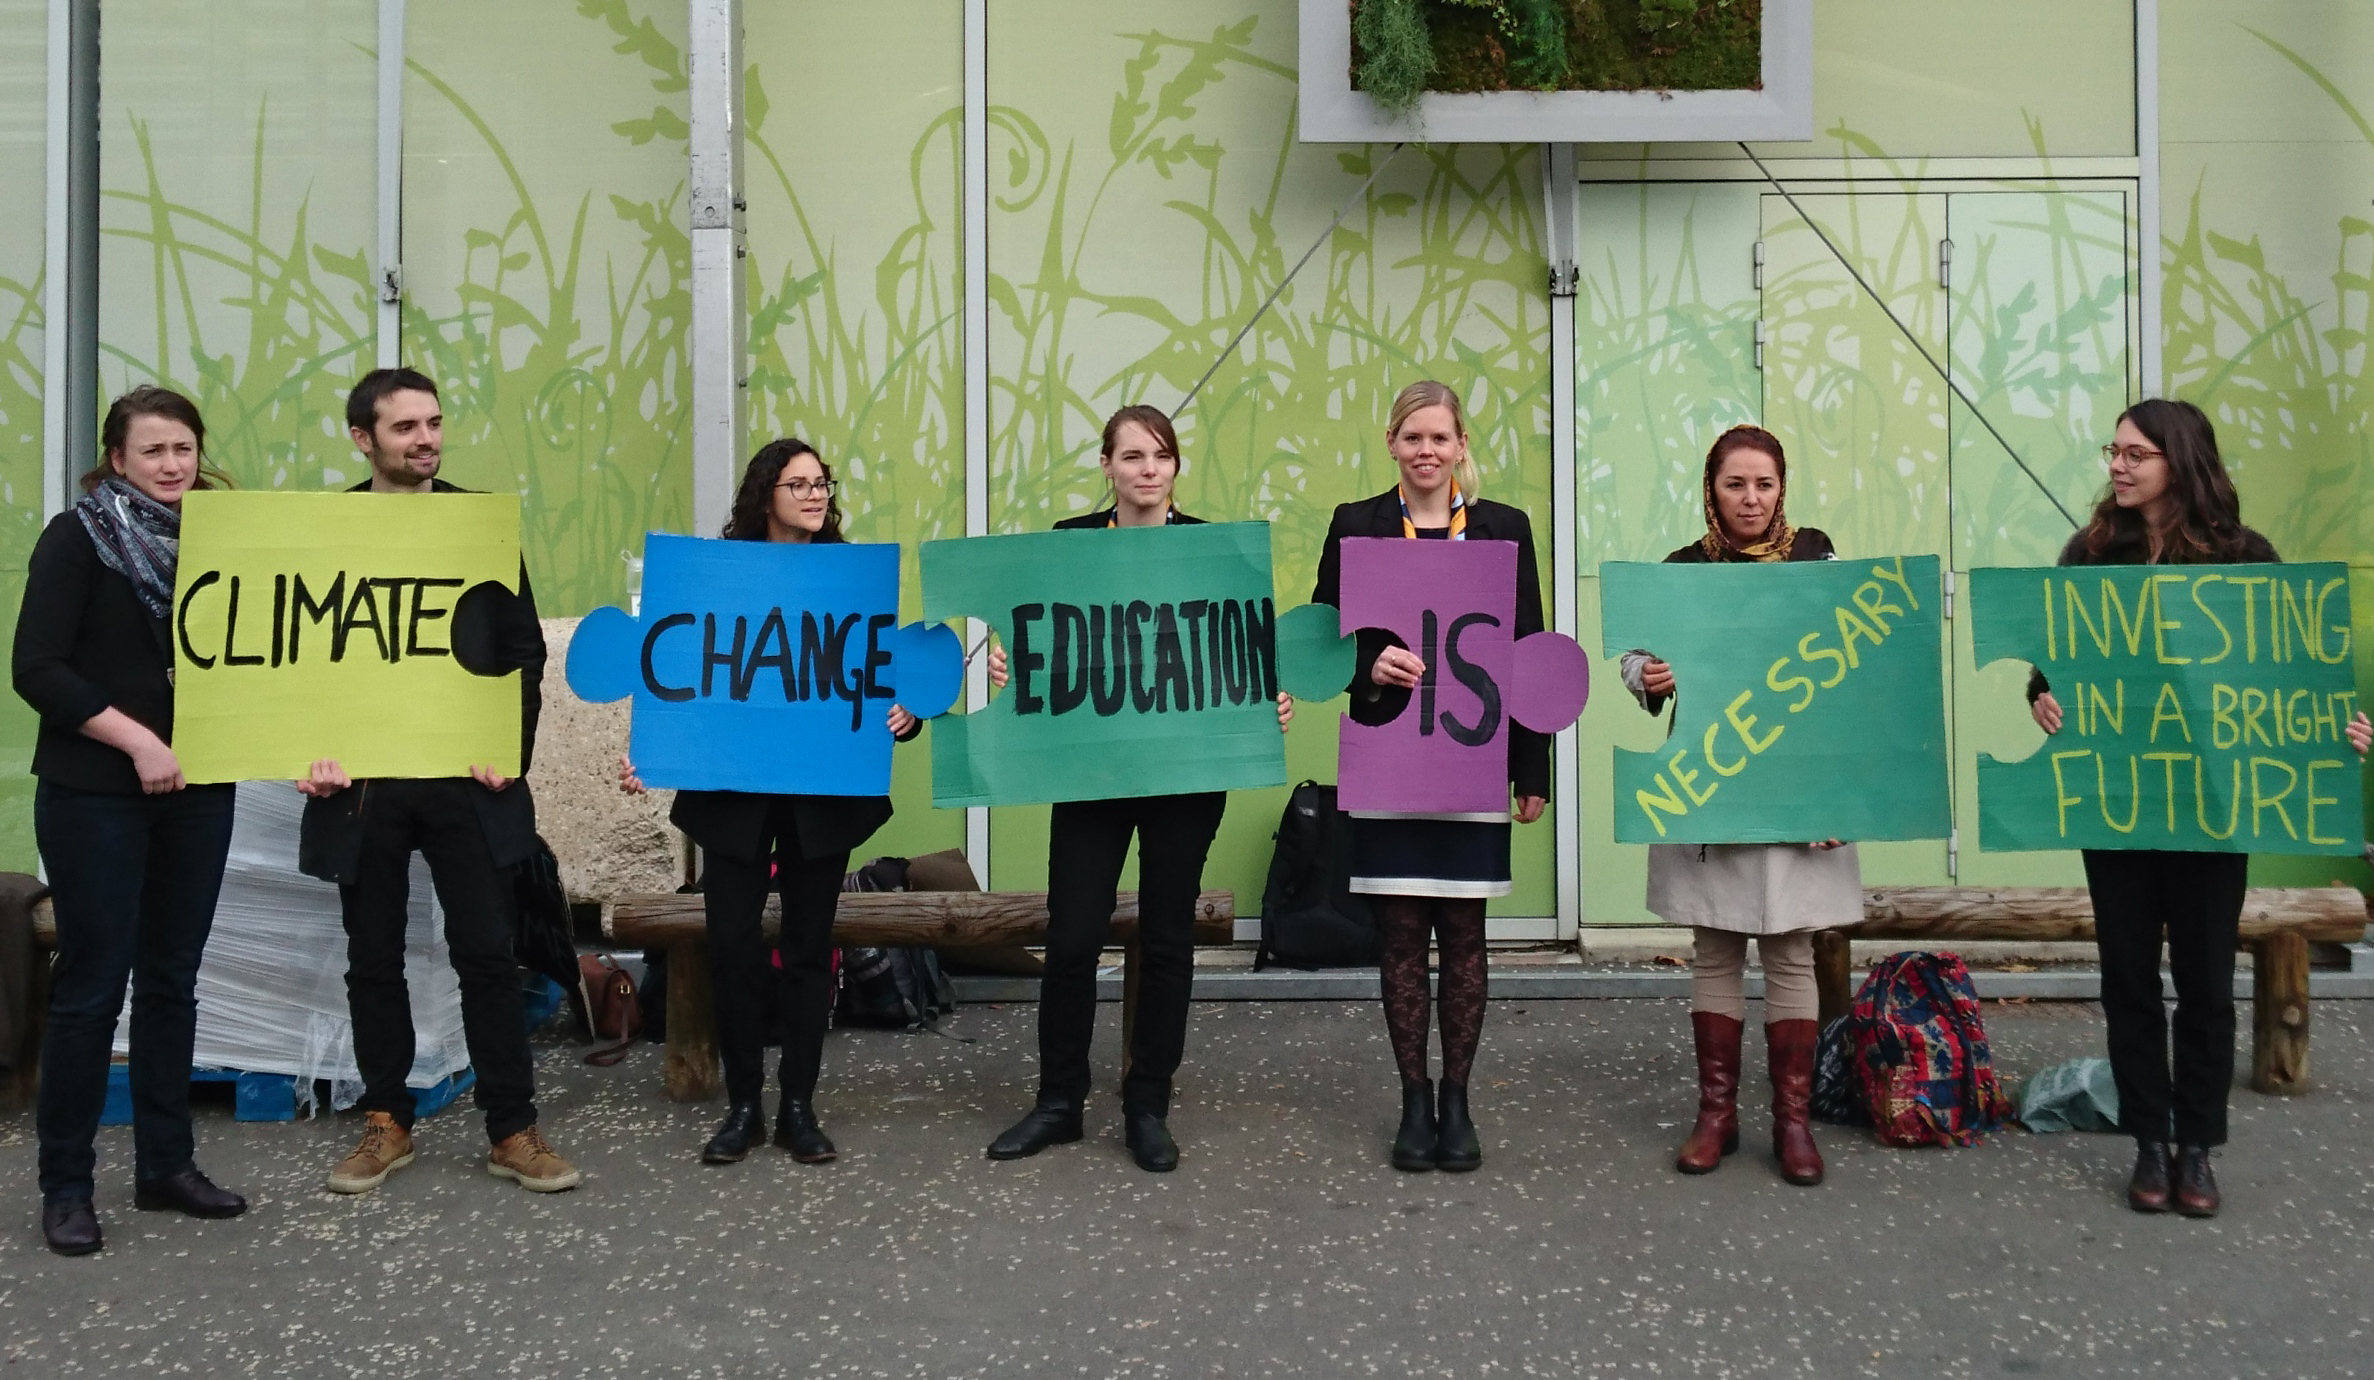 Klimataktion utanför konferenscentrat i Paris: Climate Change Education is necessry